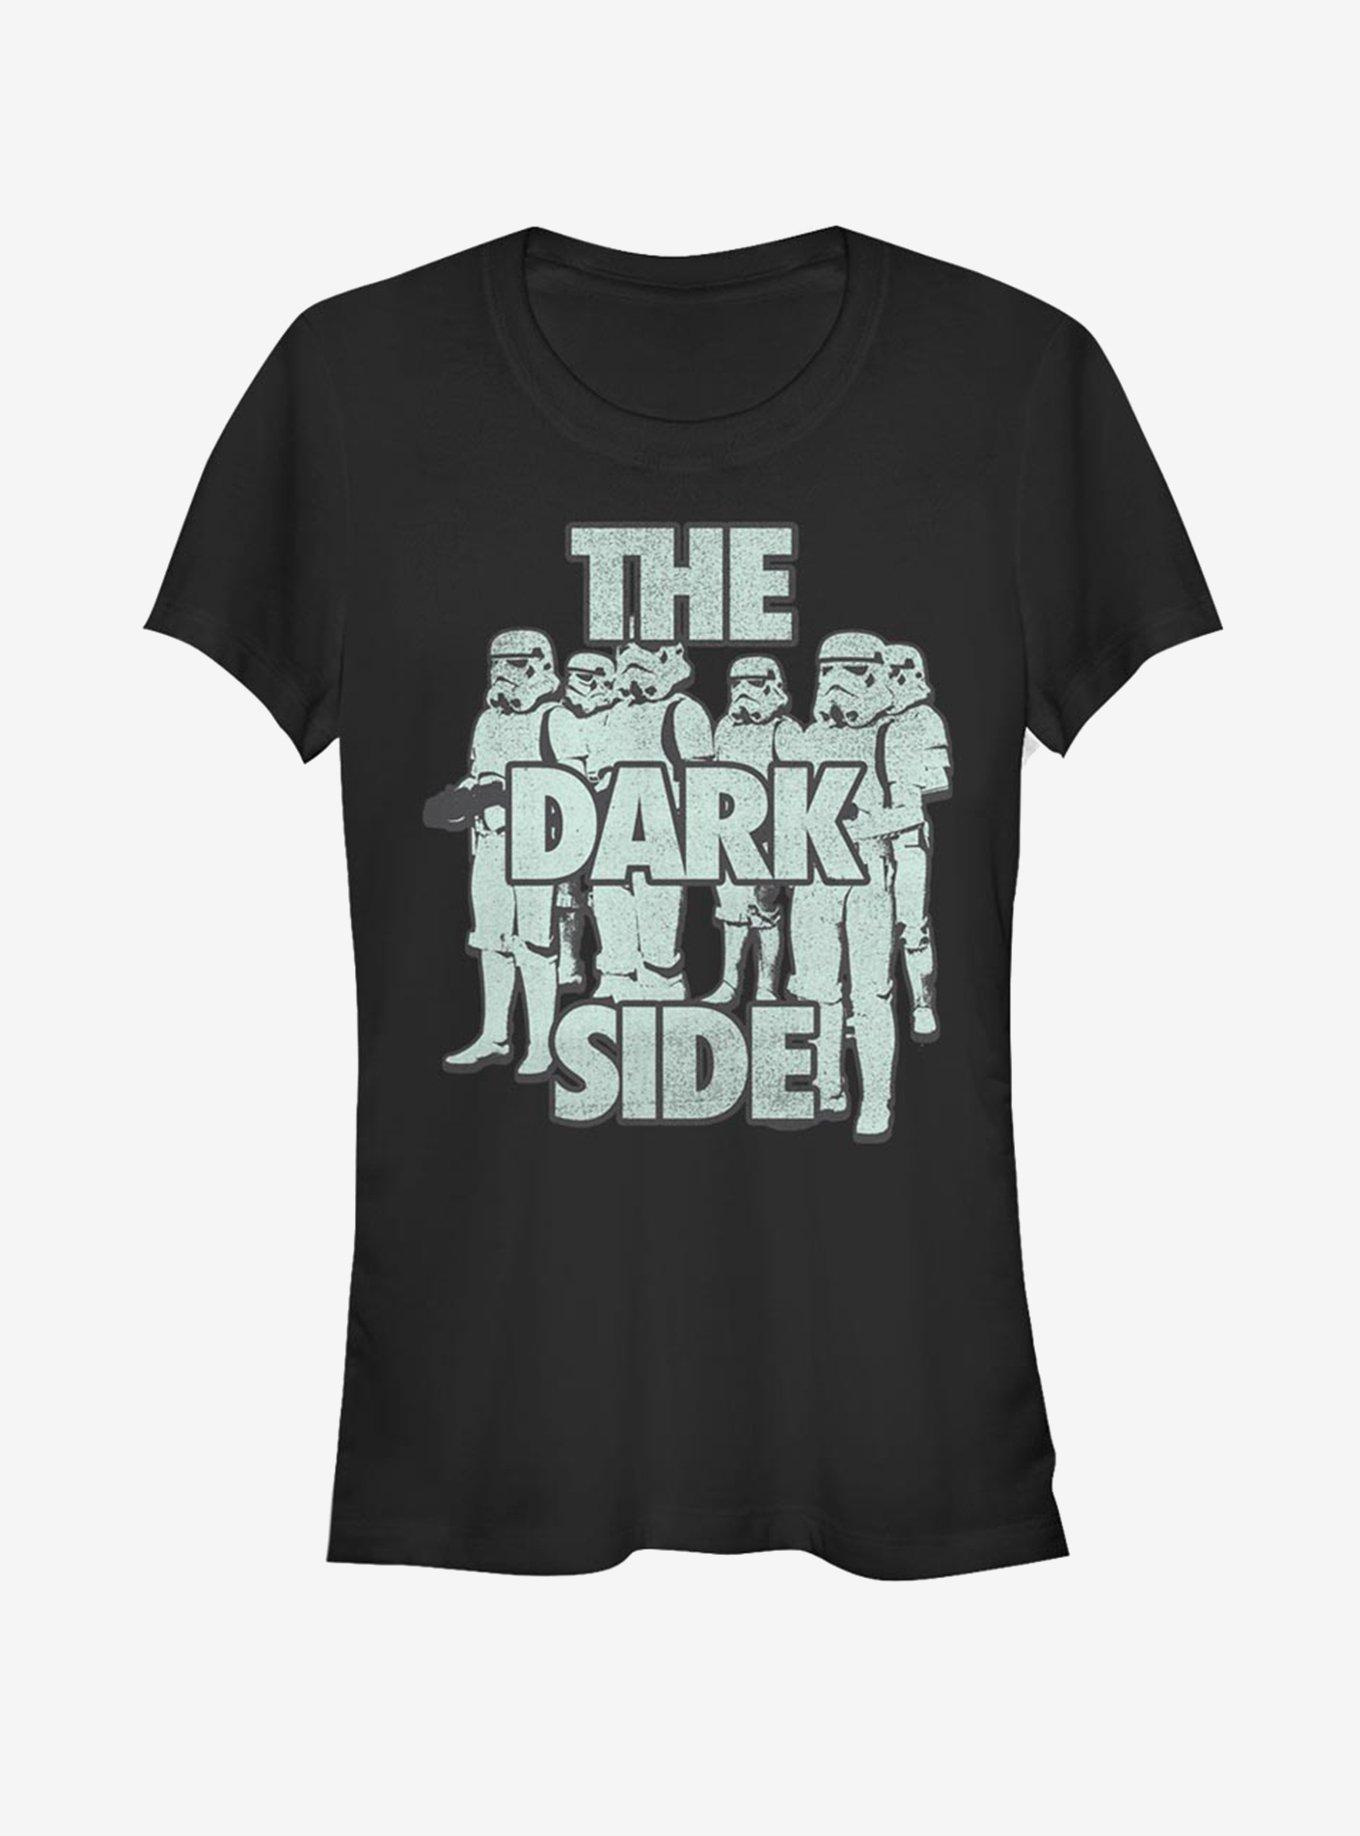 Star Wars Dark Side Troopers Girls T-Shirt